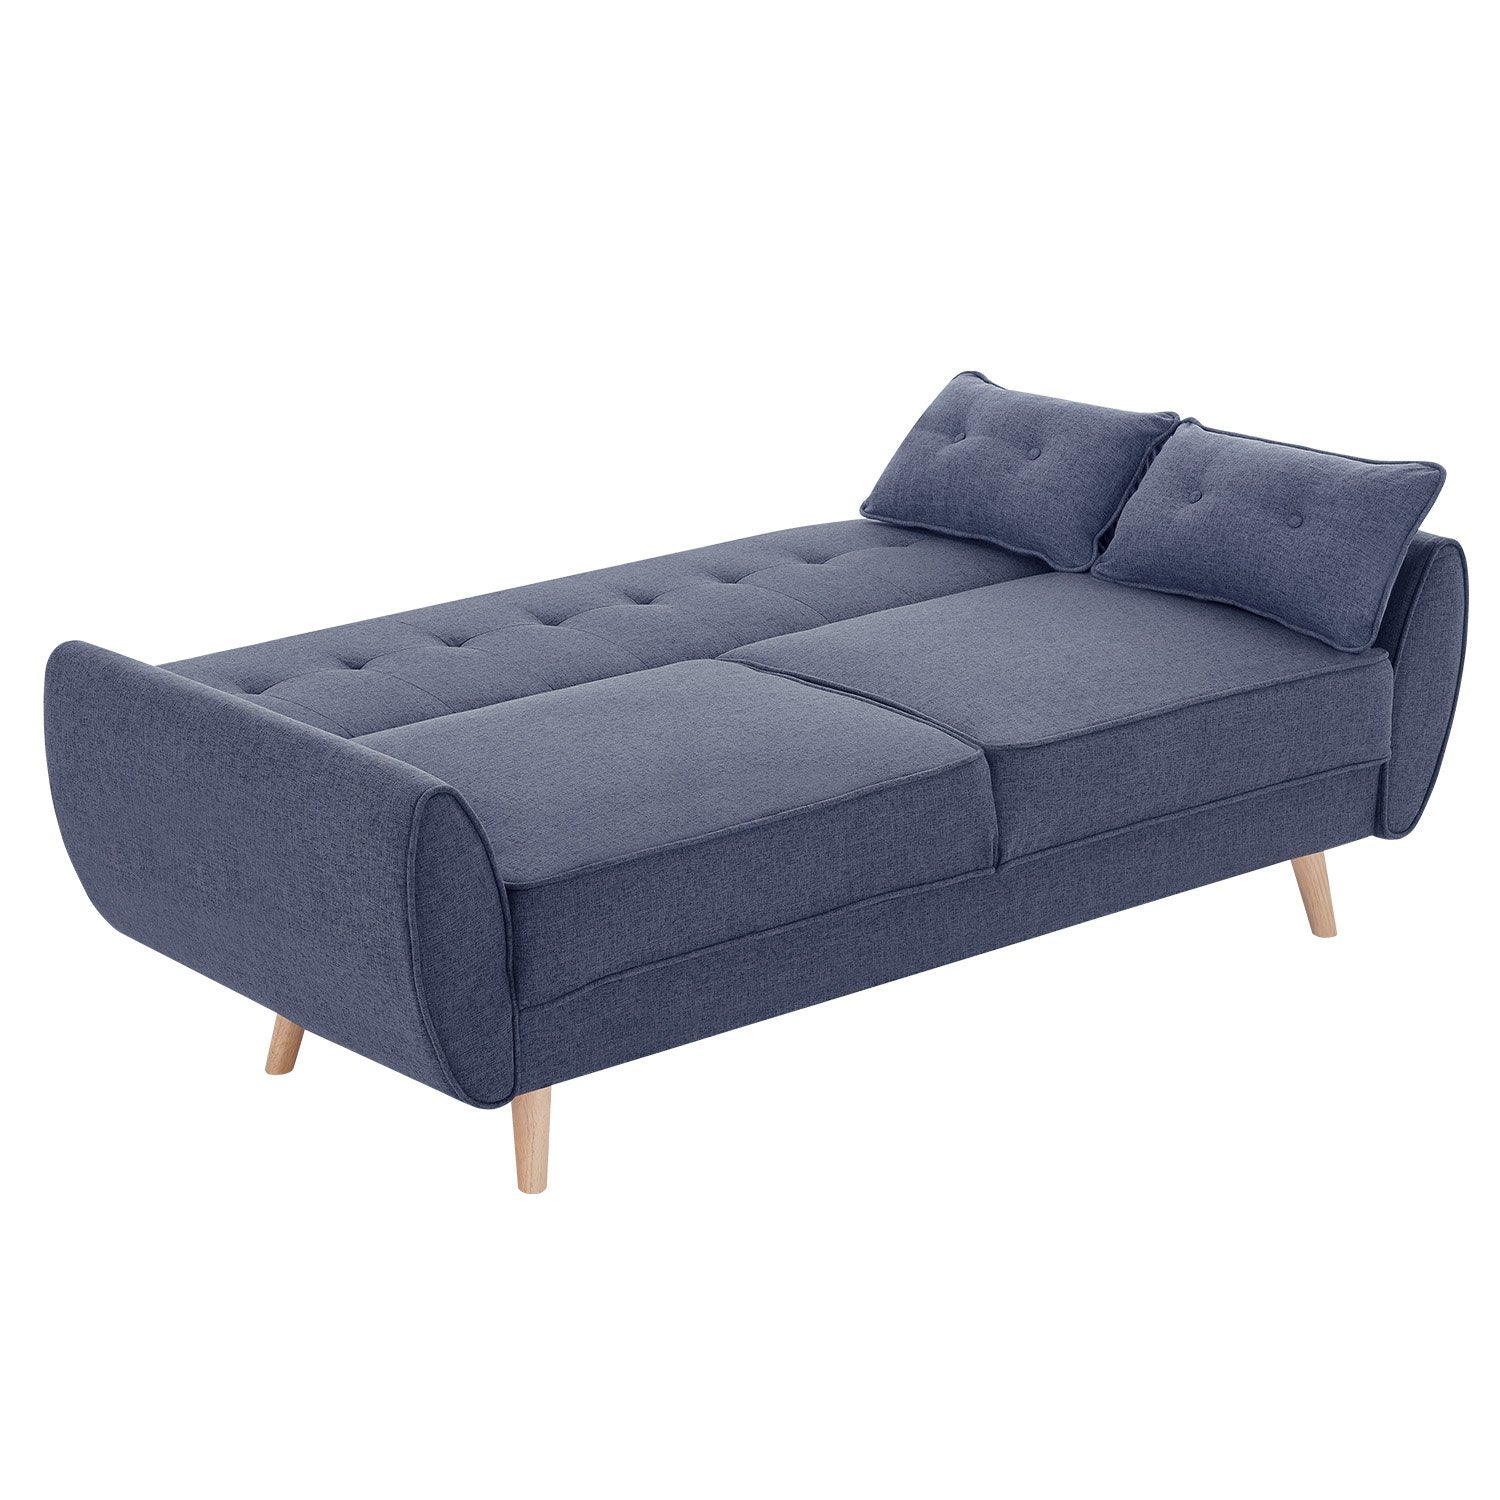 3 Seater Modular Linen Fabric Sofa Bed Couch Futon Suite - Dark Grey